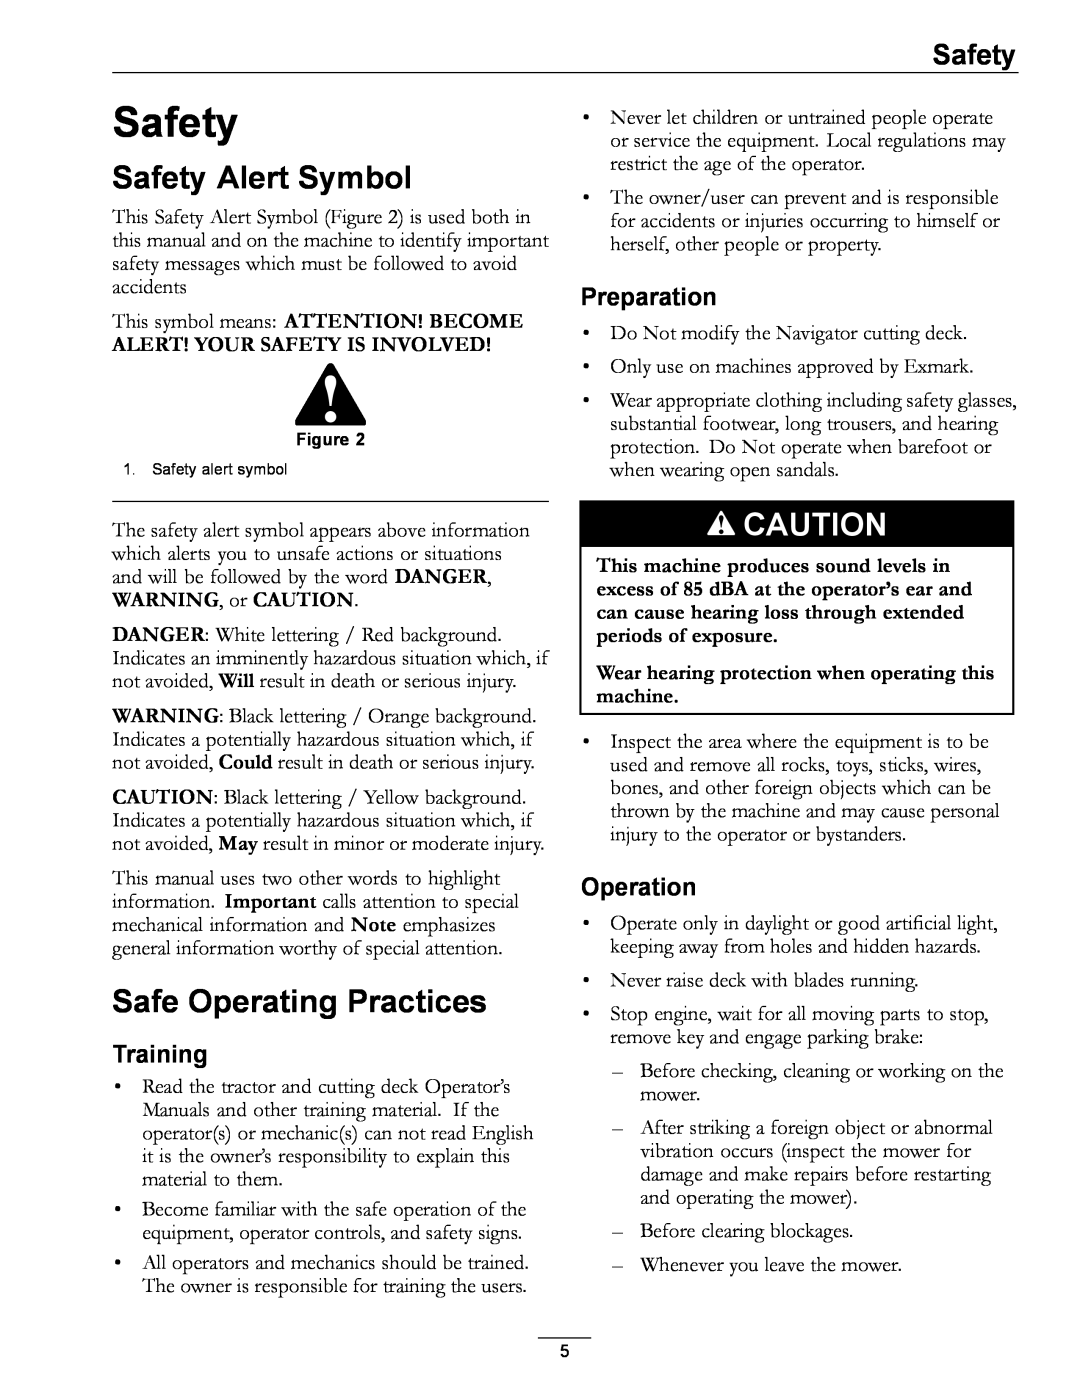 Exmark 4500-370 manual Safety Alert Symbol, Safe Operating Practices, Training, Preparation, Operation 